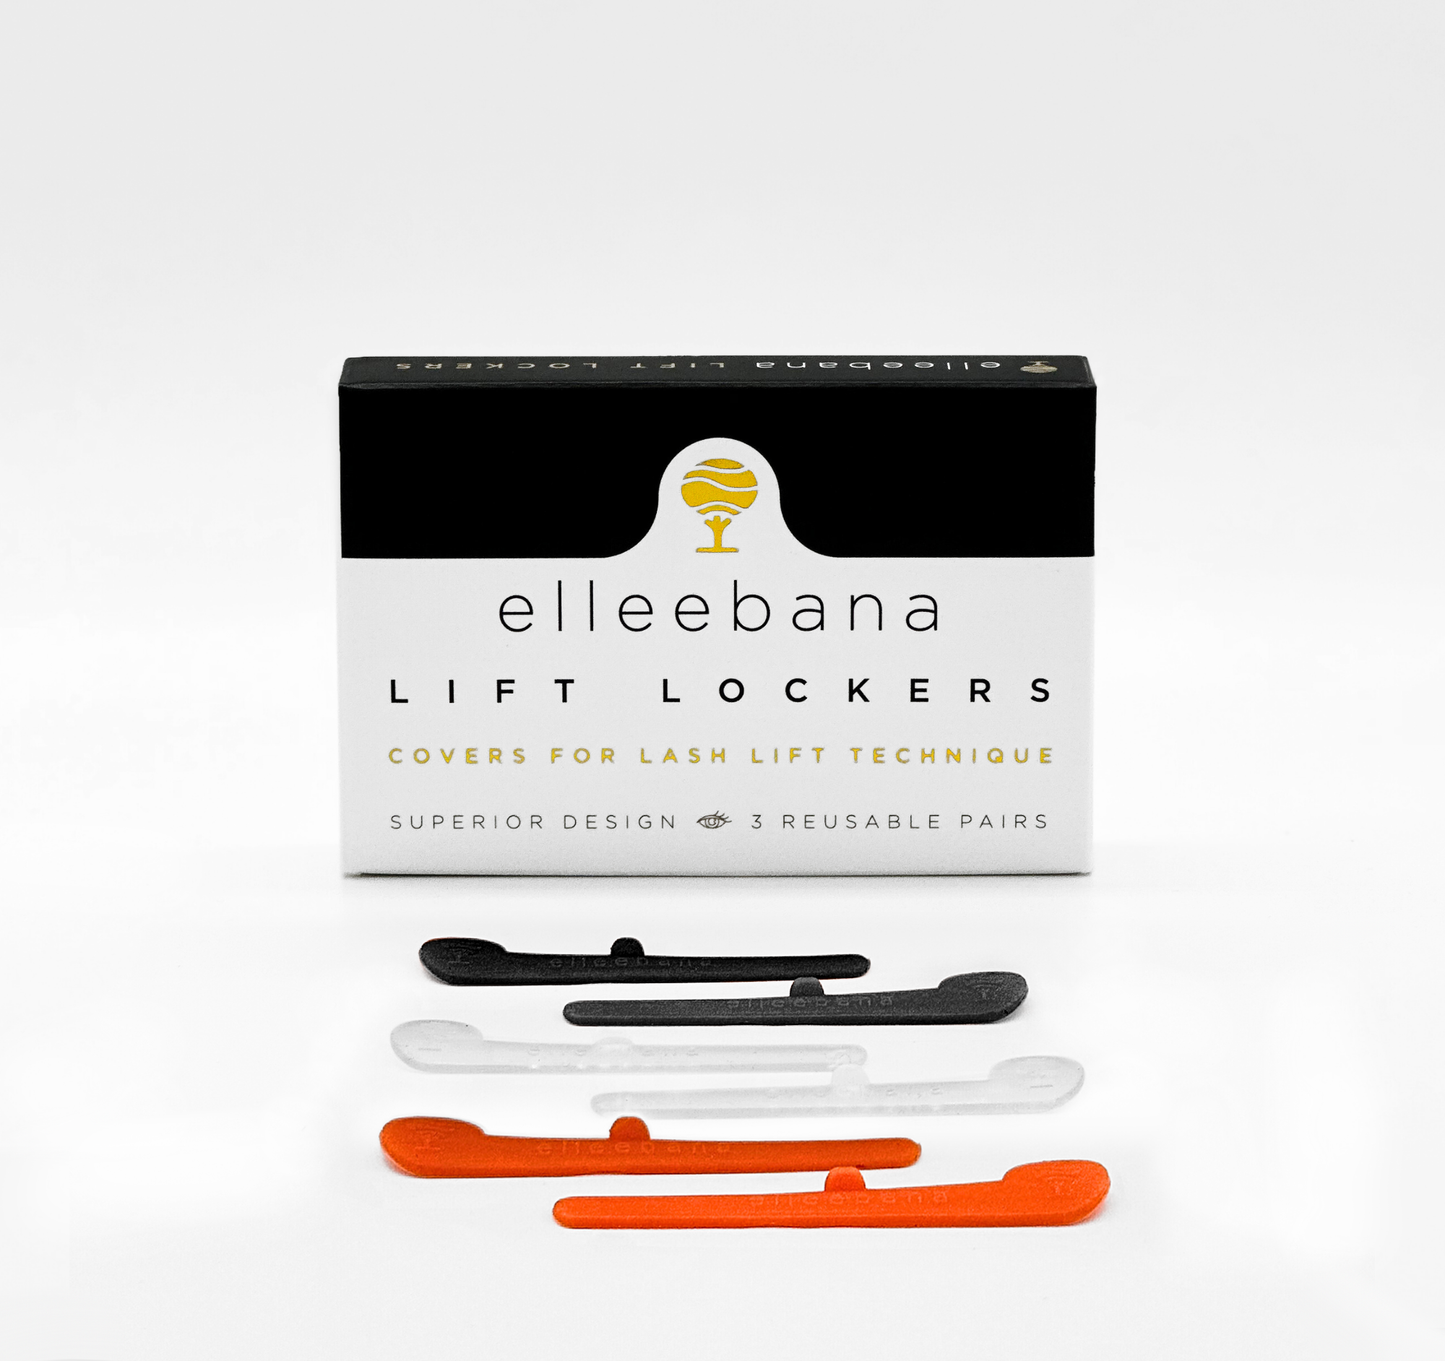 ELLEEBANA LIFT LOCKERS- NEW PRODUCT!